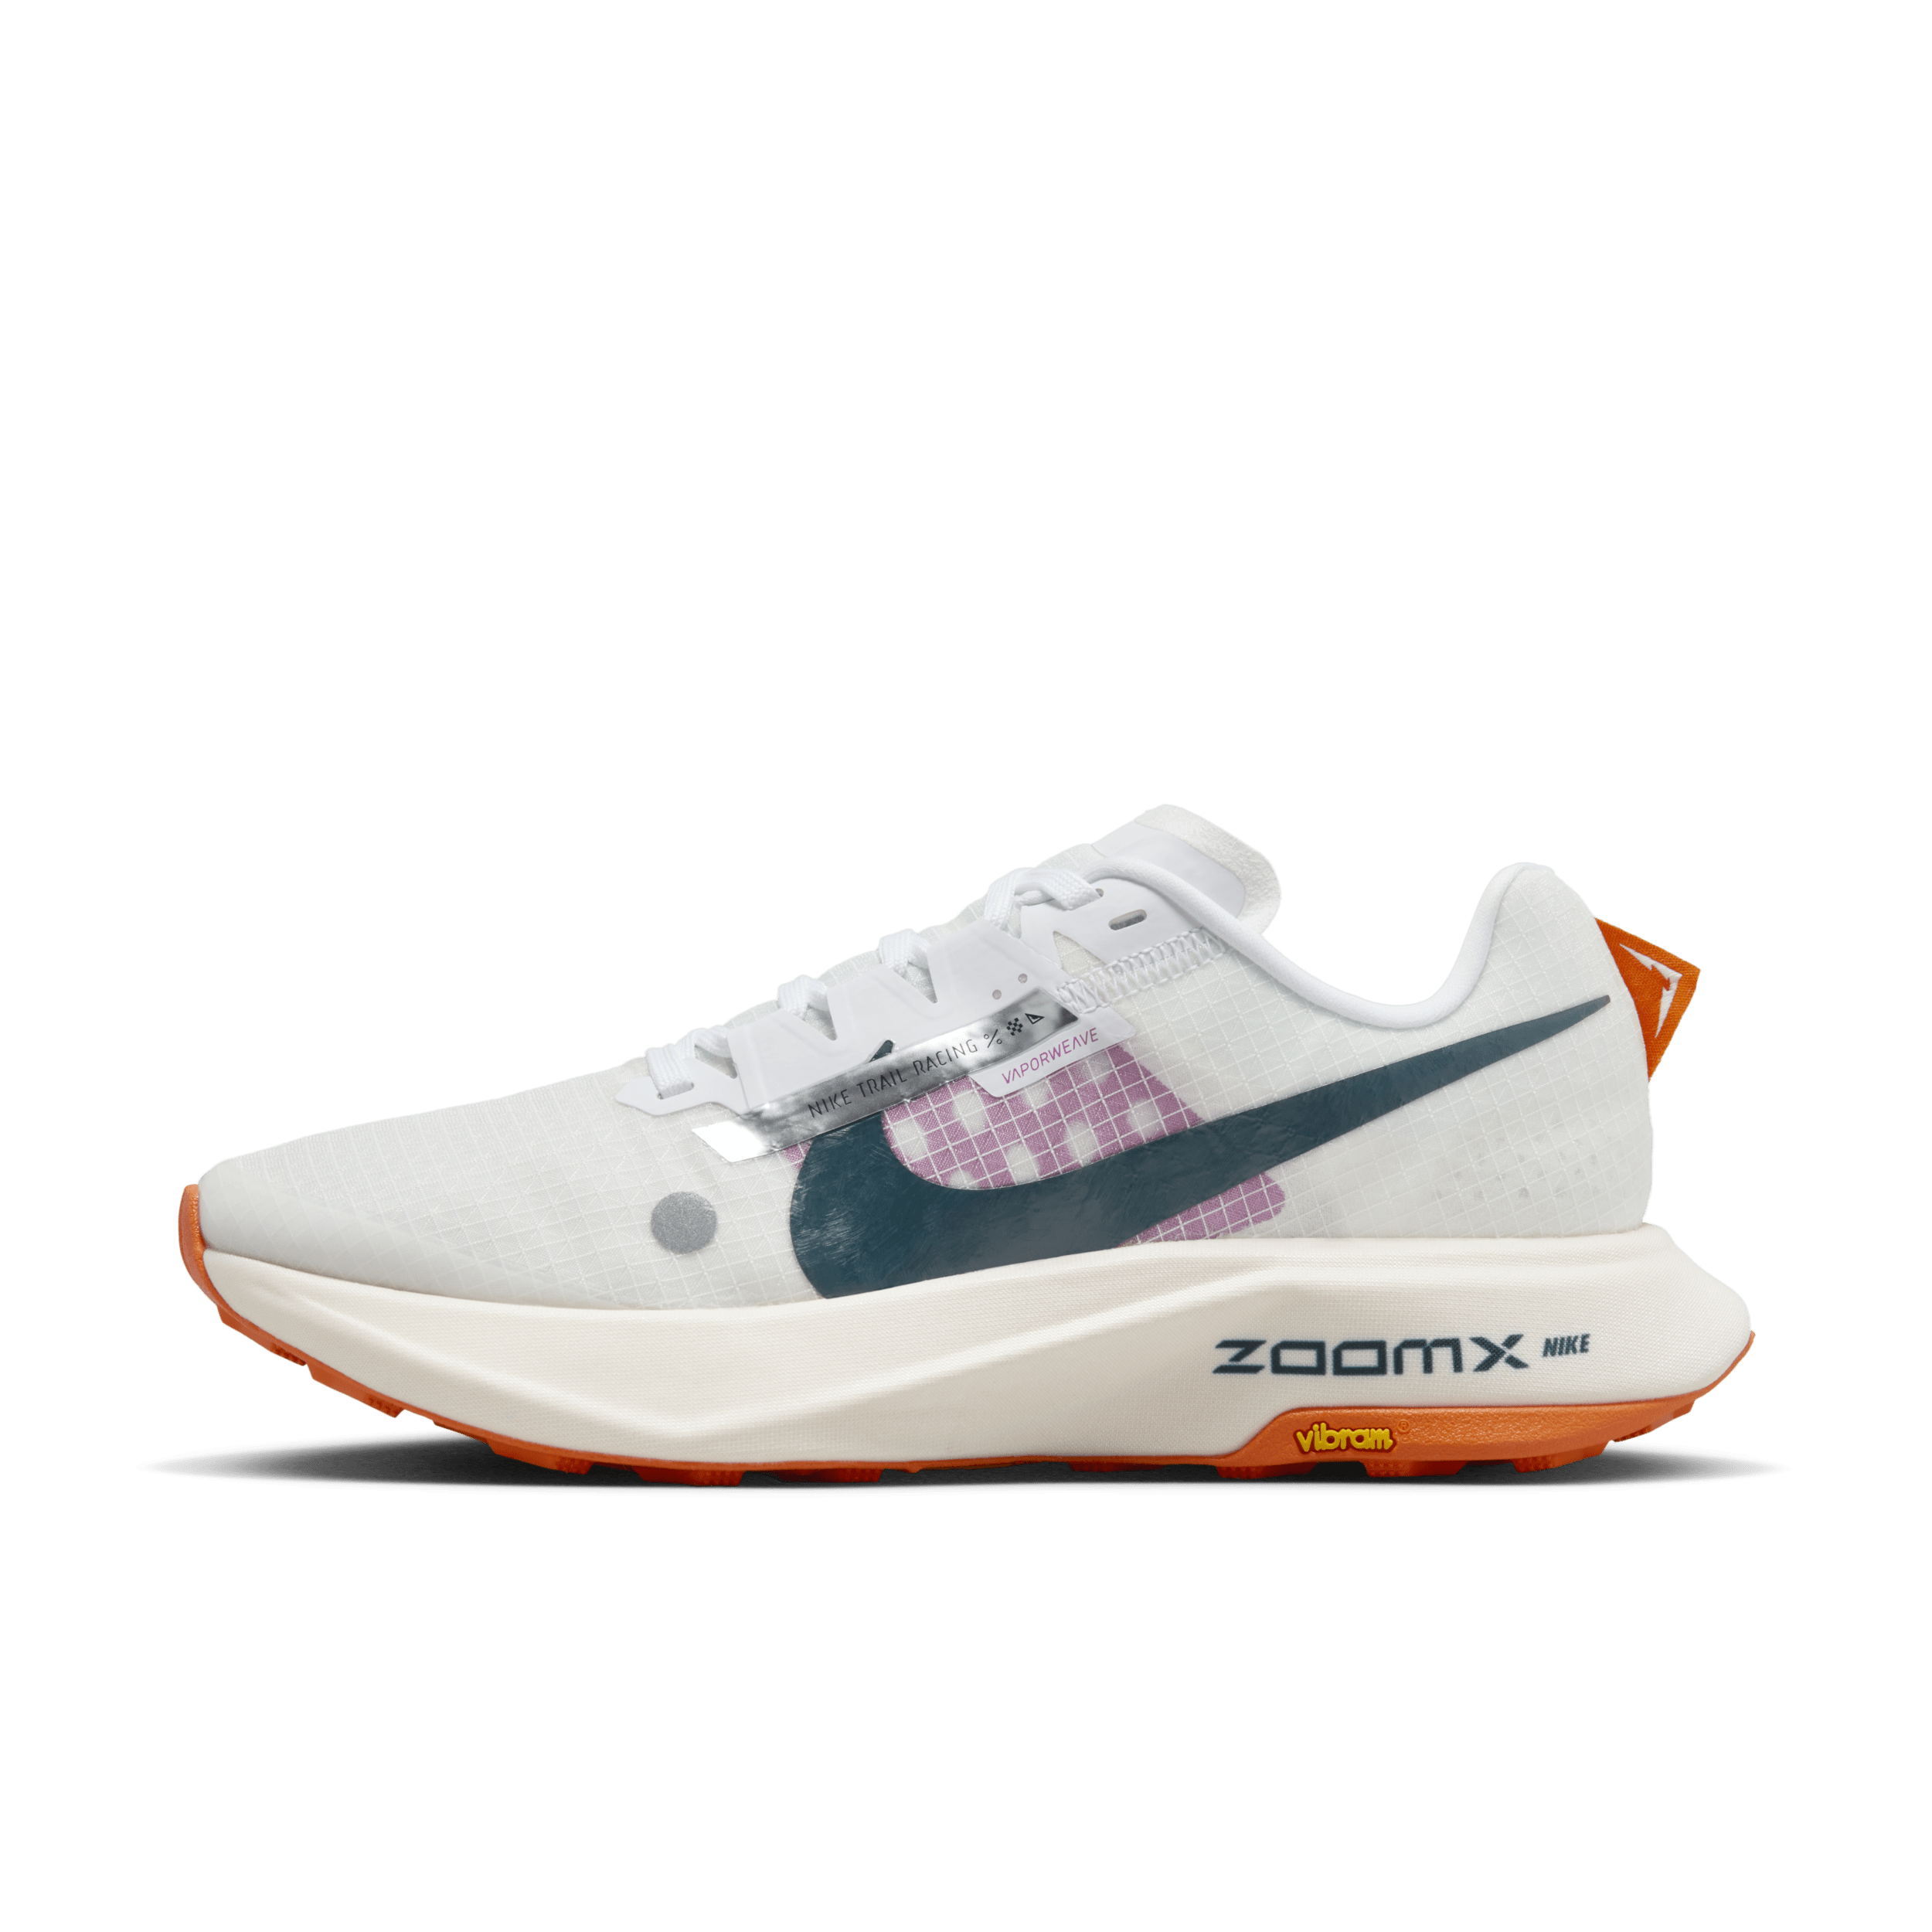 Nike Ultrafly Zapatillas de trail running - Mujer - Blanco